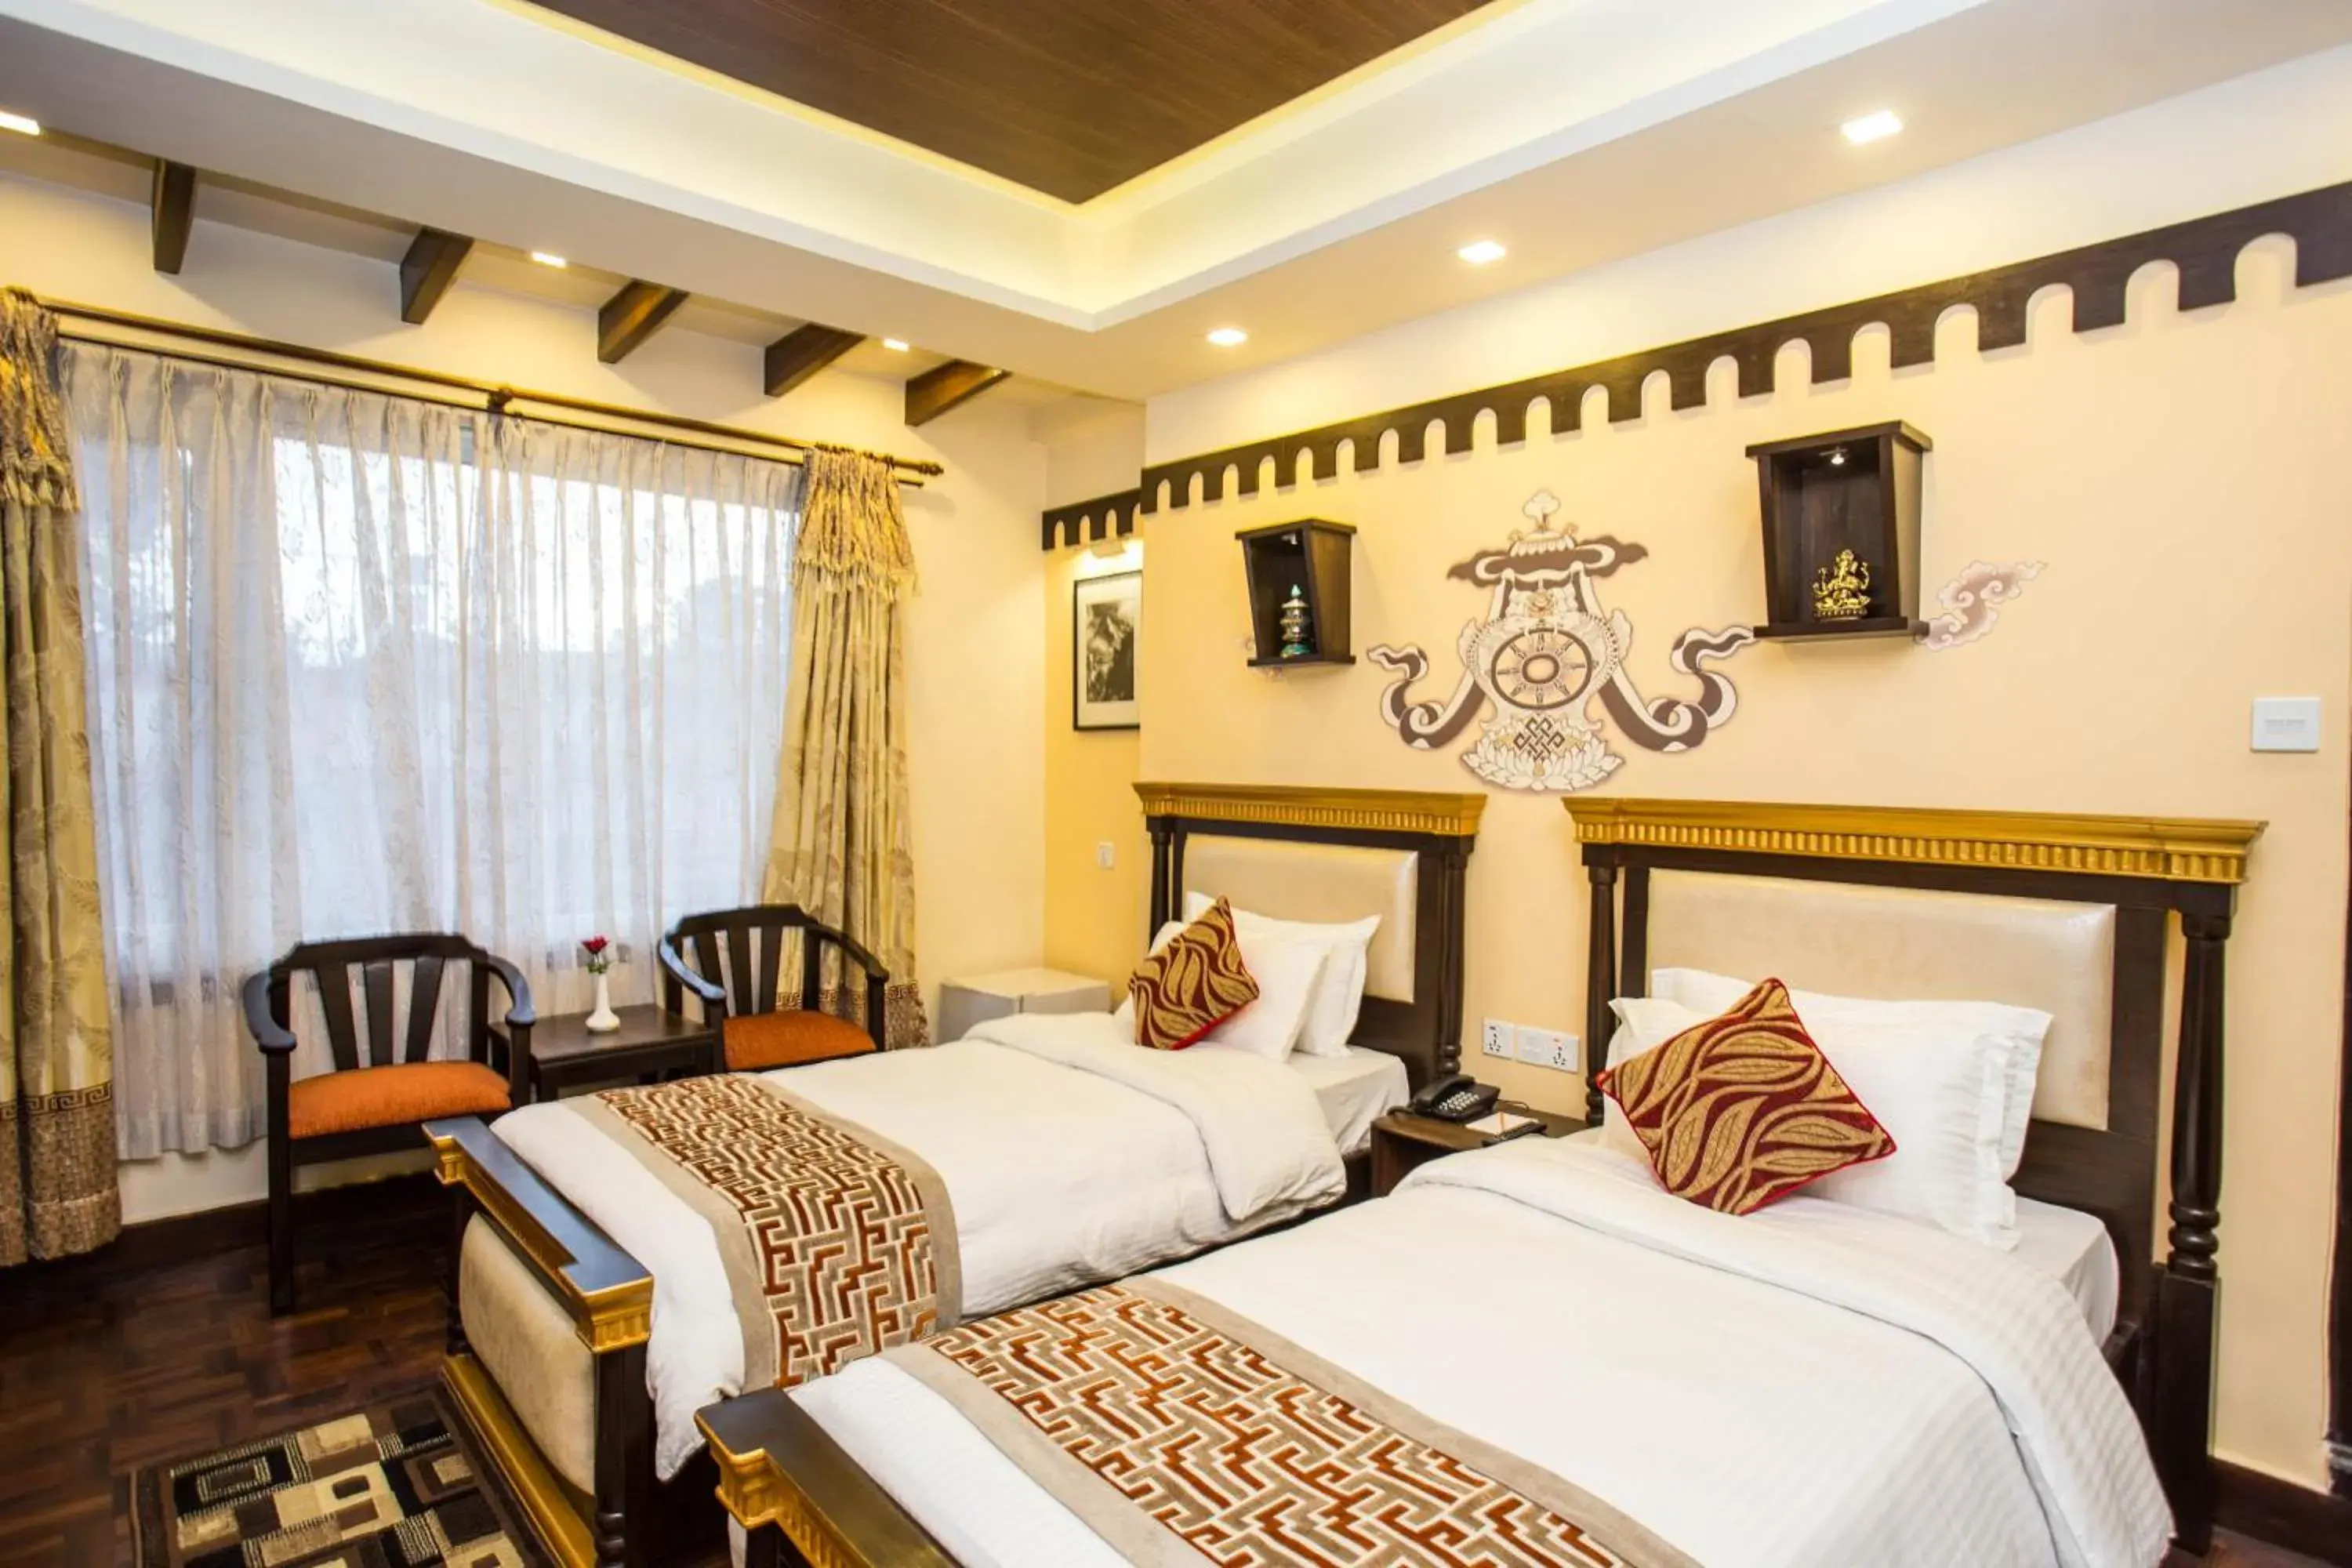 Bedroom, Room Photo in Hotel Encounter Nepal